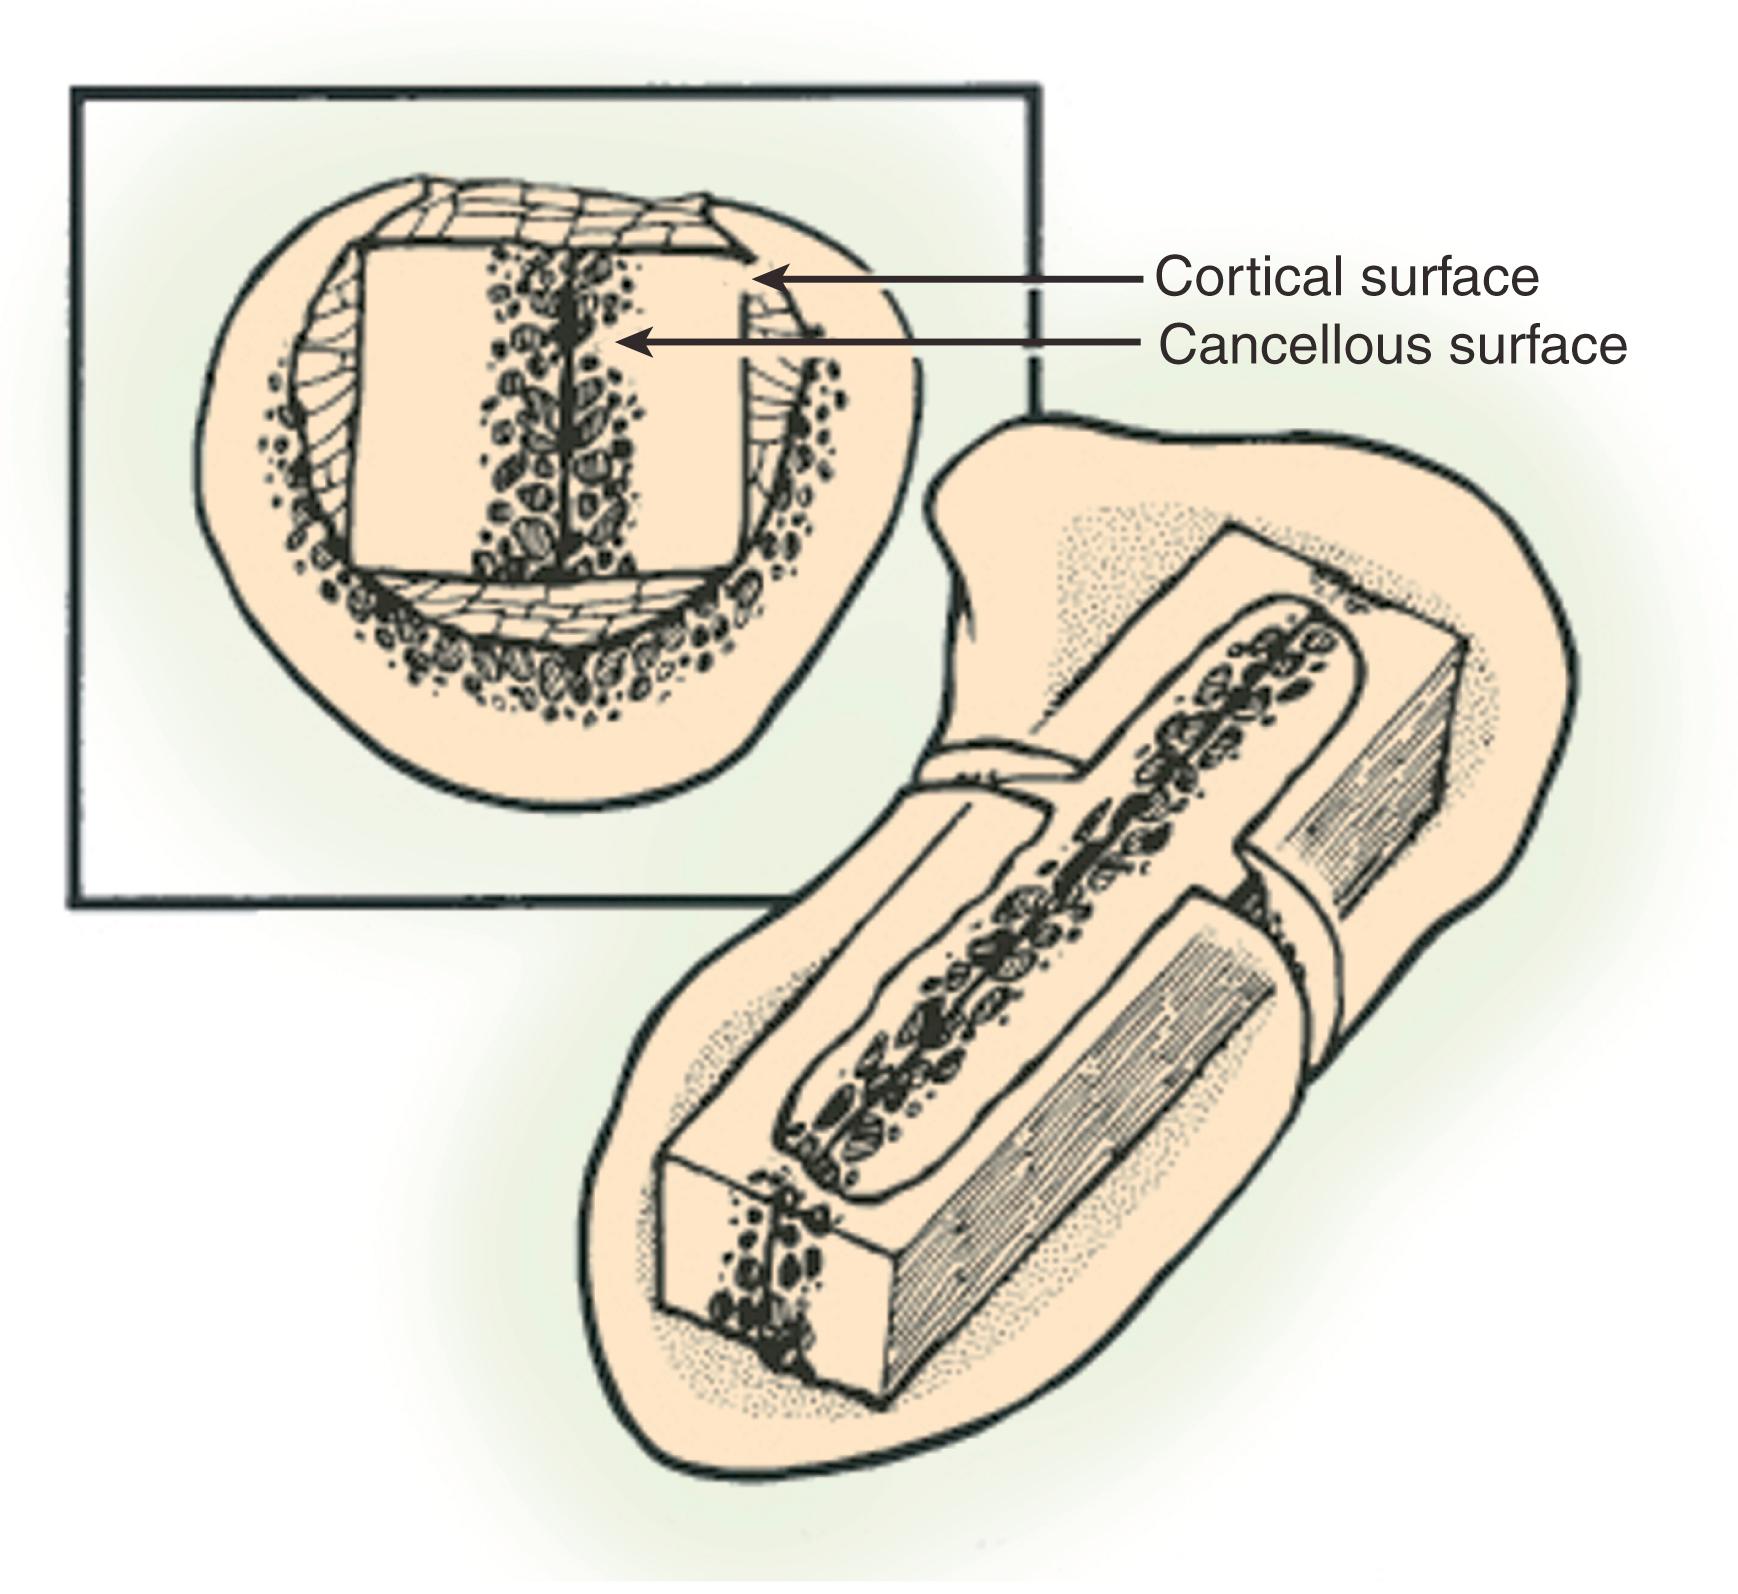 Fig. 16.18, Russe technique using two corticocancellous bone grafts.